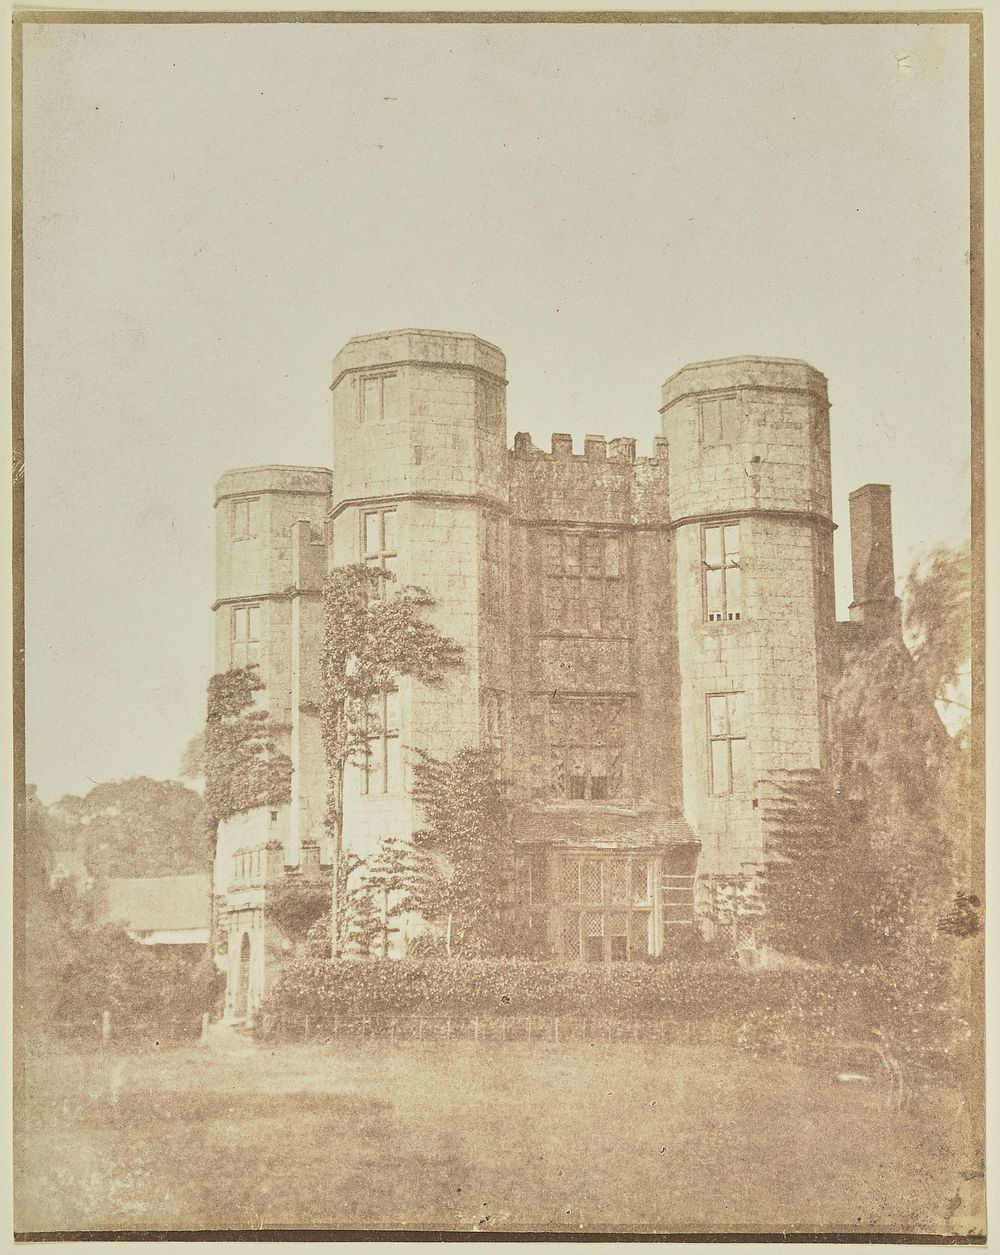 Kenilworth Castle by William Henry Fox Talbot, Hippolyte Bayard and Samuel Buckle